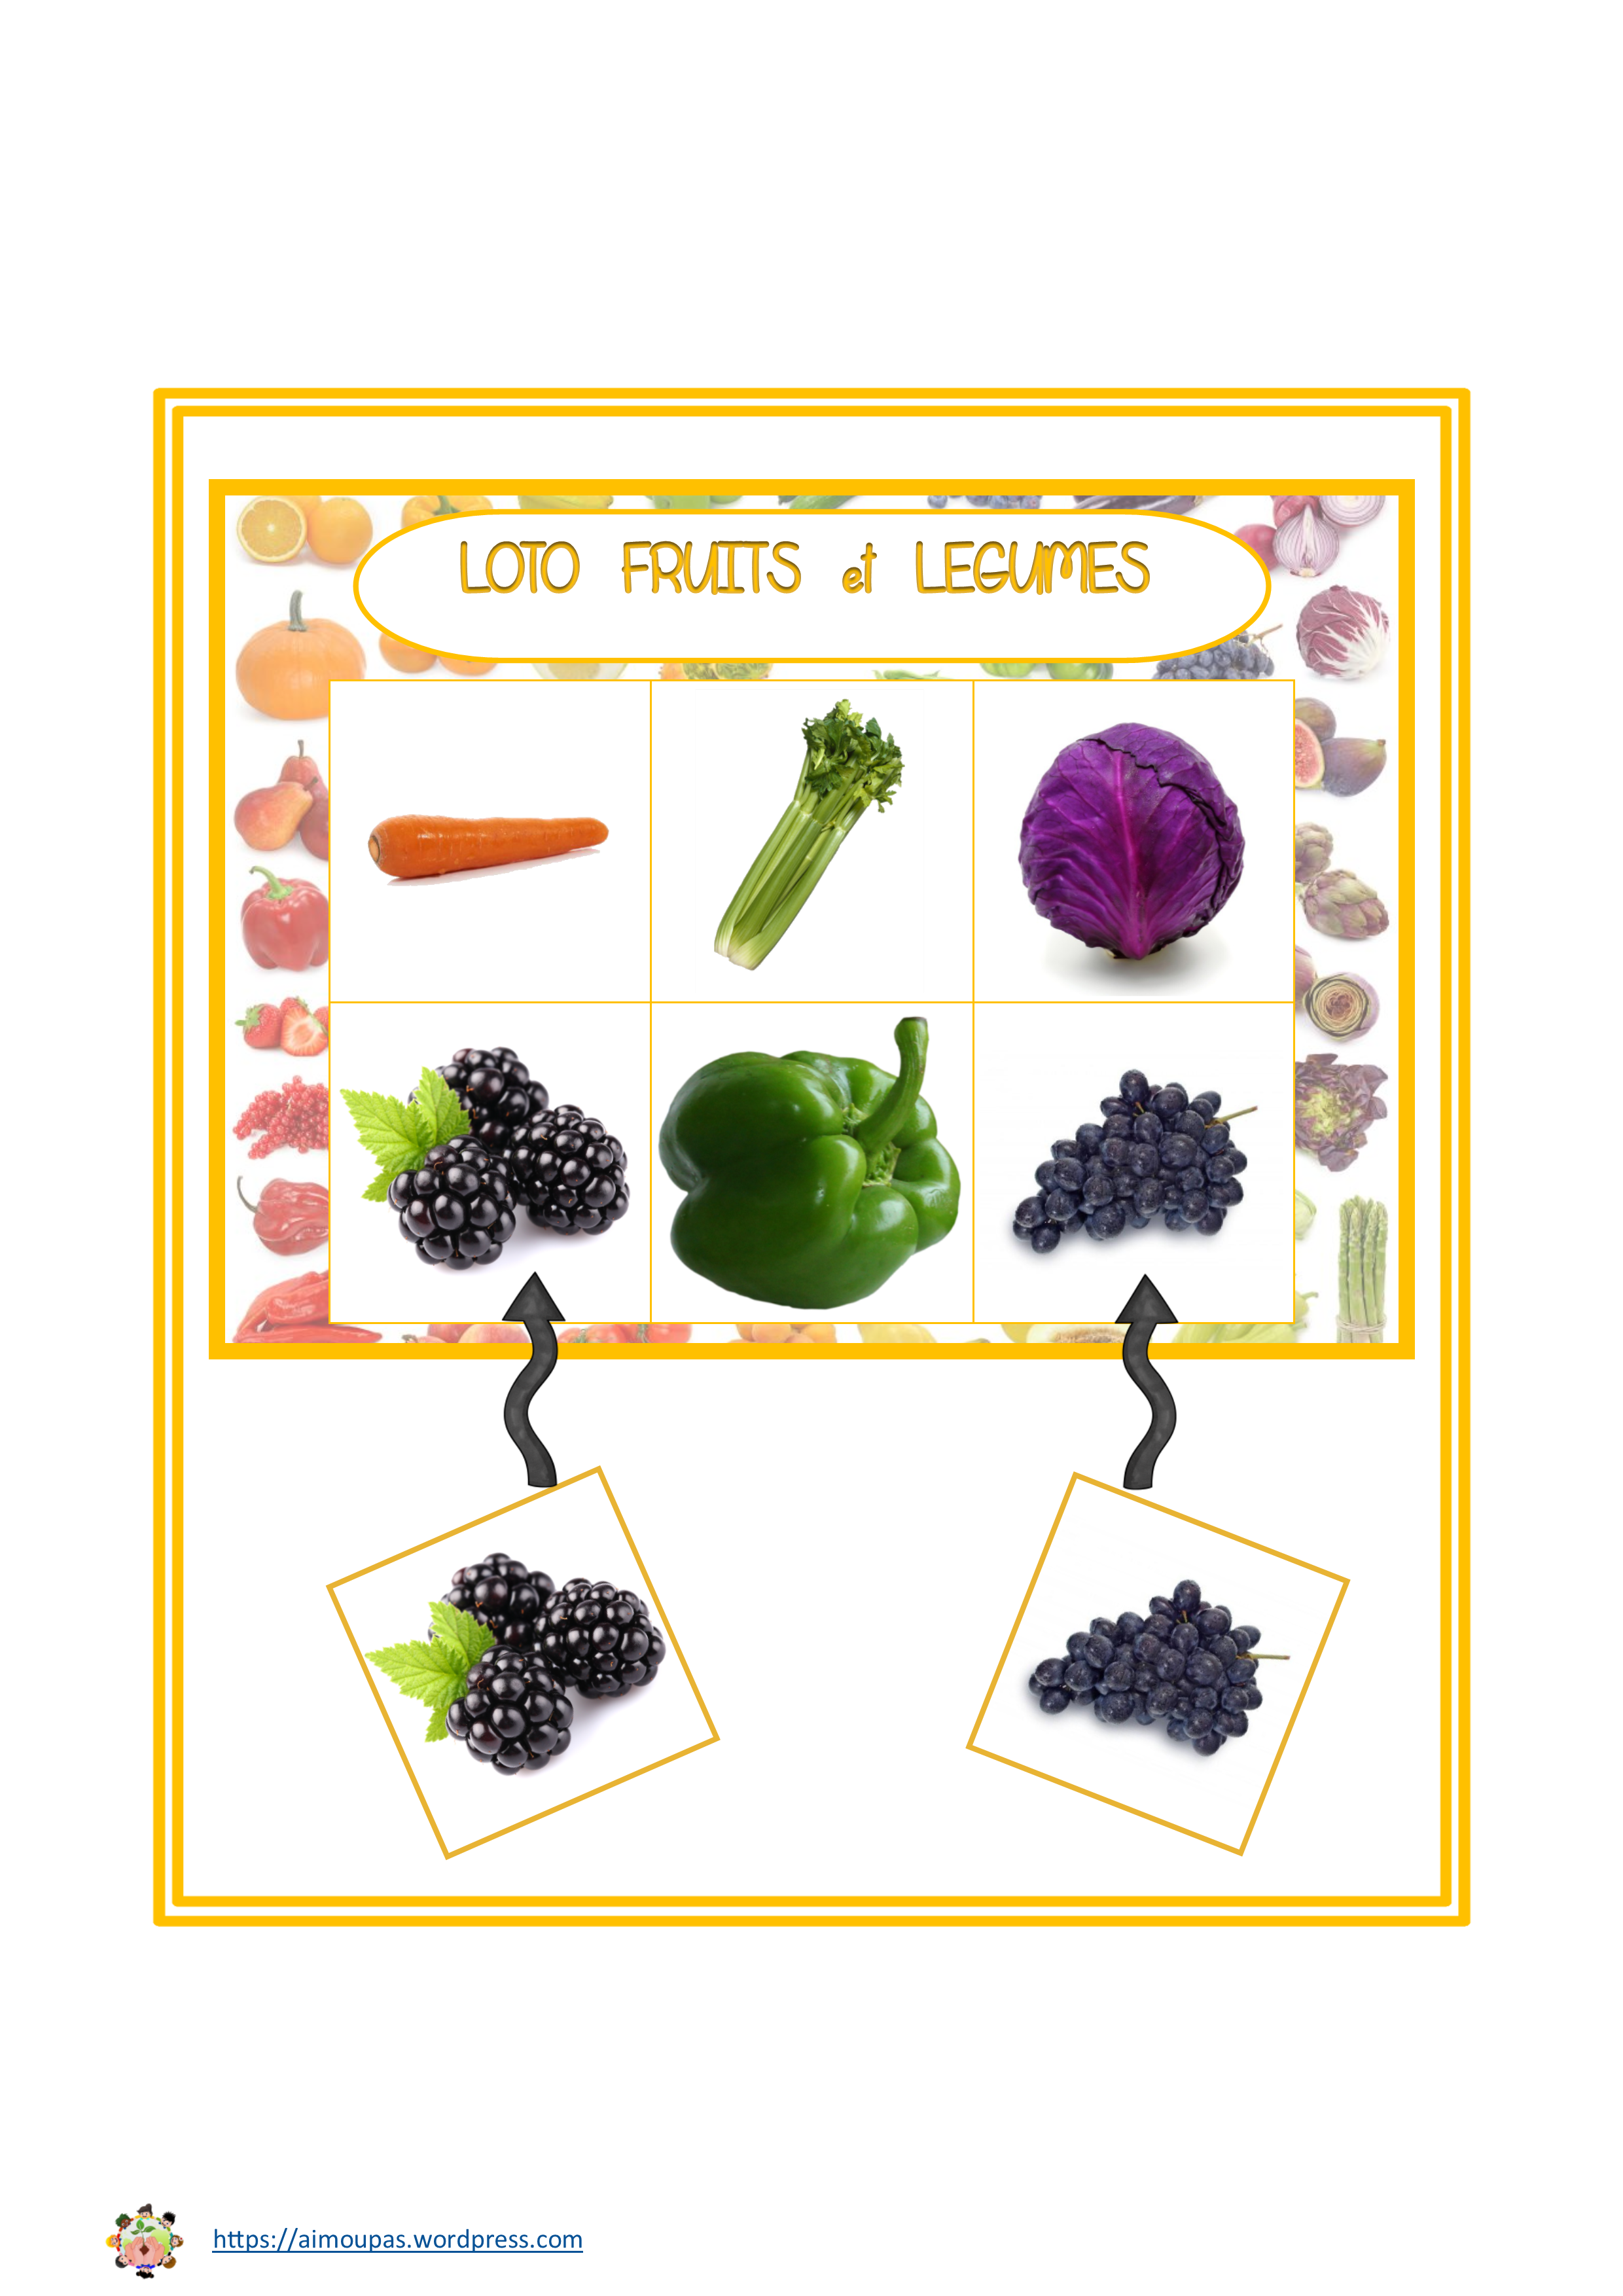 [Folder] Loto fruits et légumes